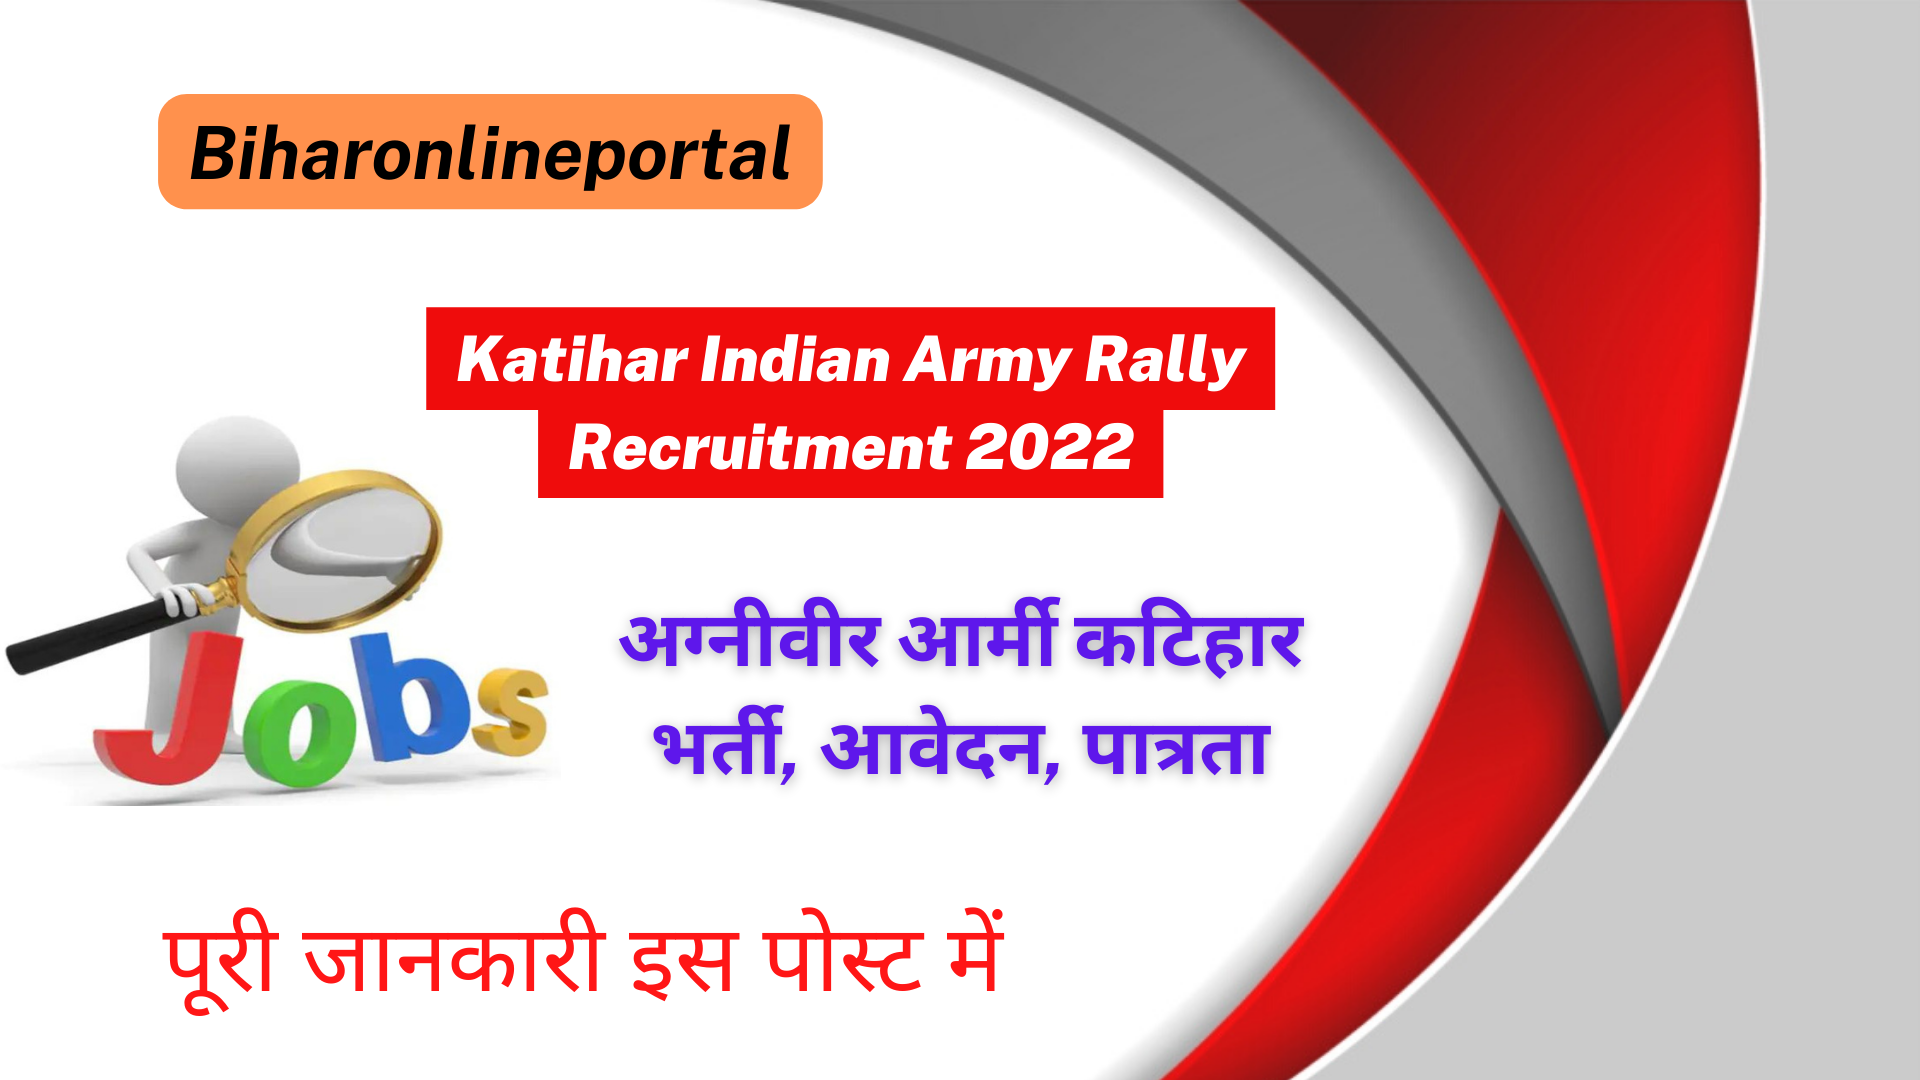 Katihar Indian Army Rally Recruitment 2022